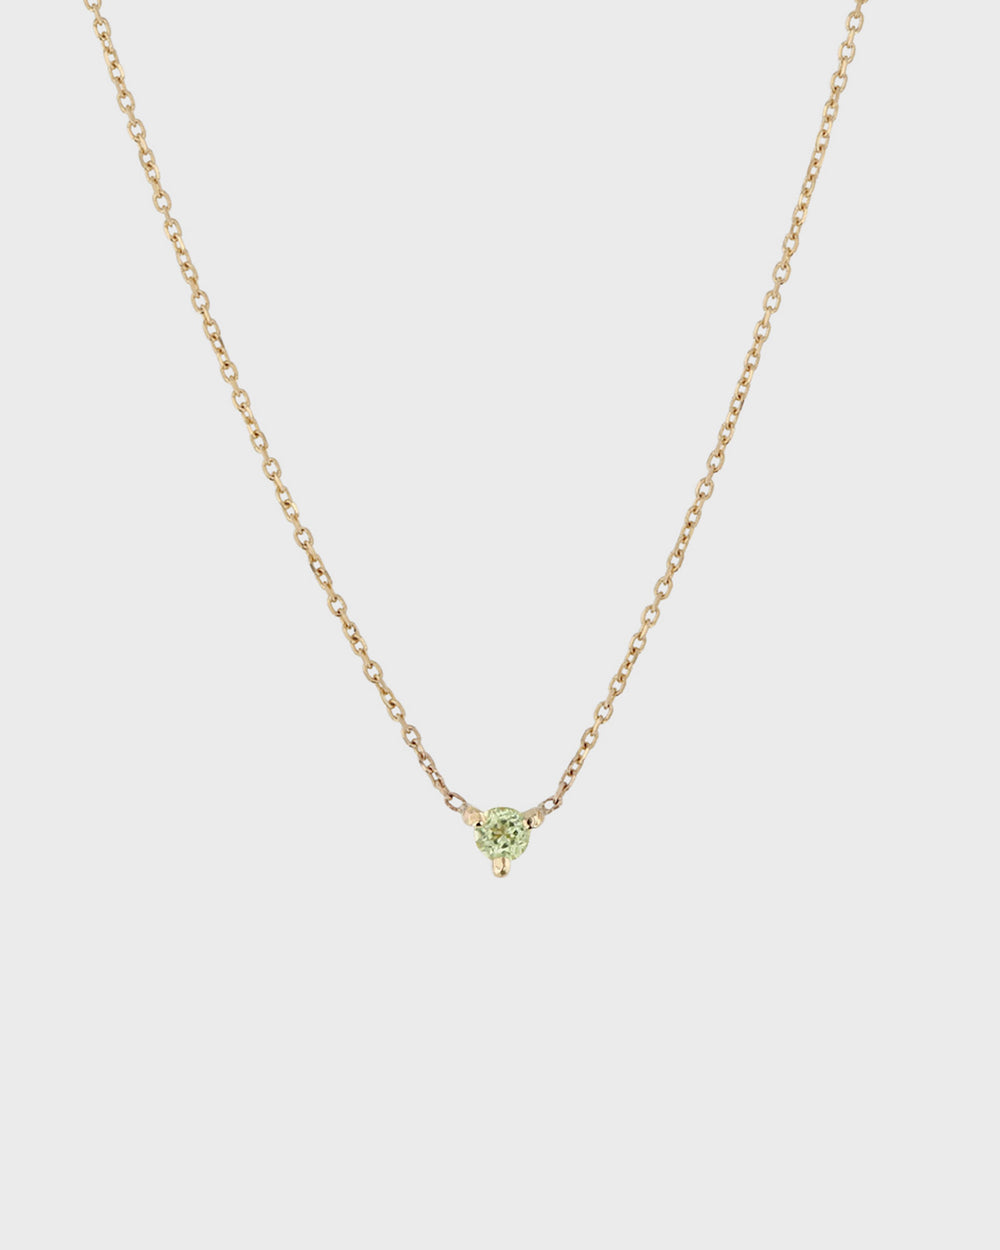 The Petite Peridot Birthstone Necklace by Sarah & Sebastian